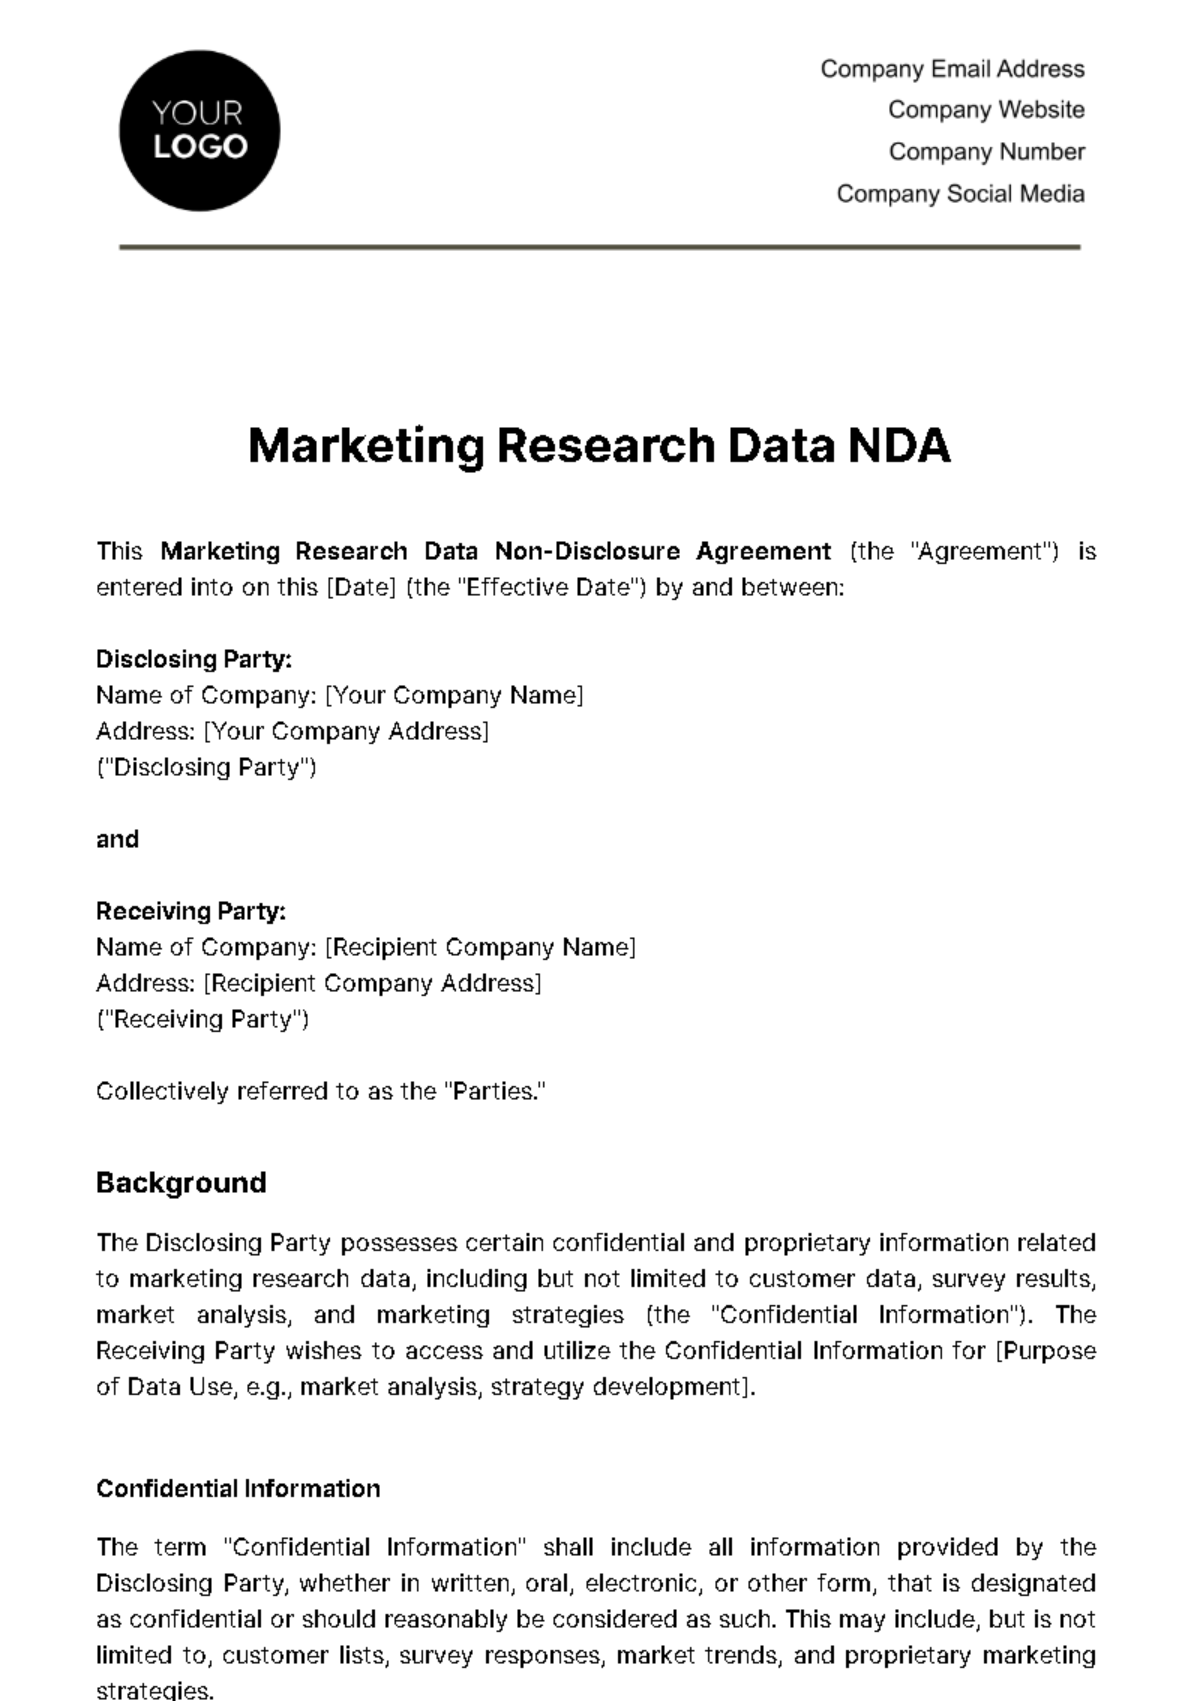 Marketing Research Data NDA Template